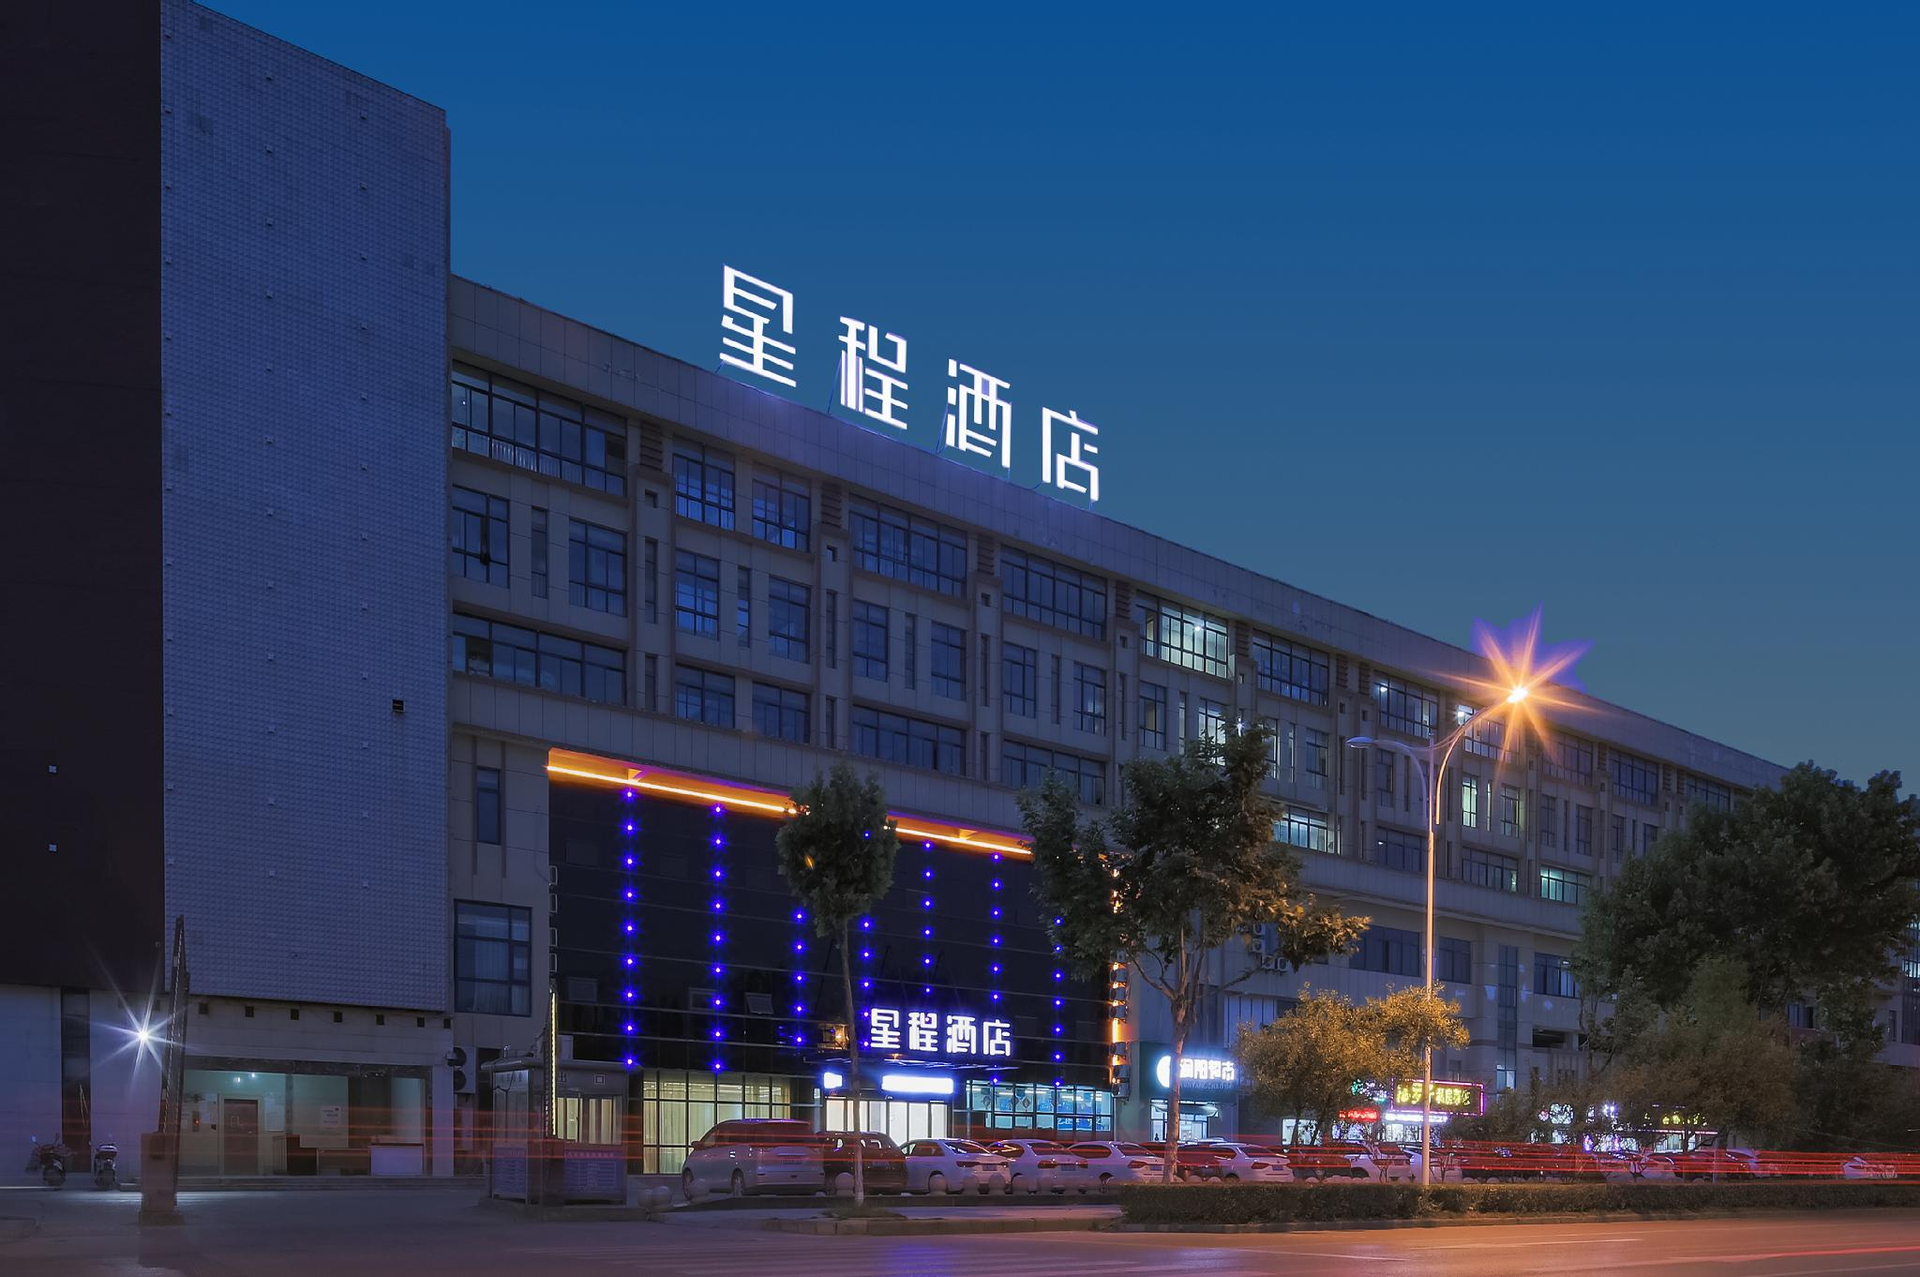 Starway Hotel Zhenjiang Jurong Jiangsu Polytechnic College of Agriculture and Forestry, Zhenjiang